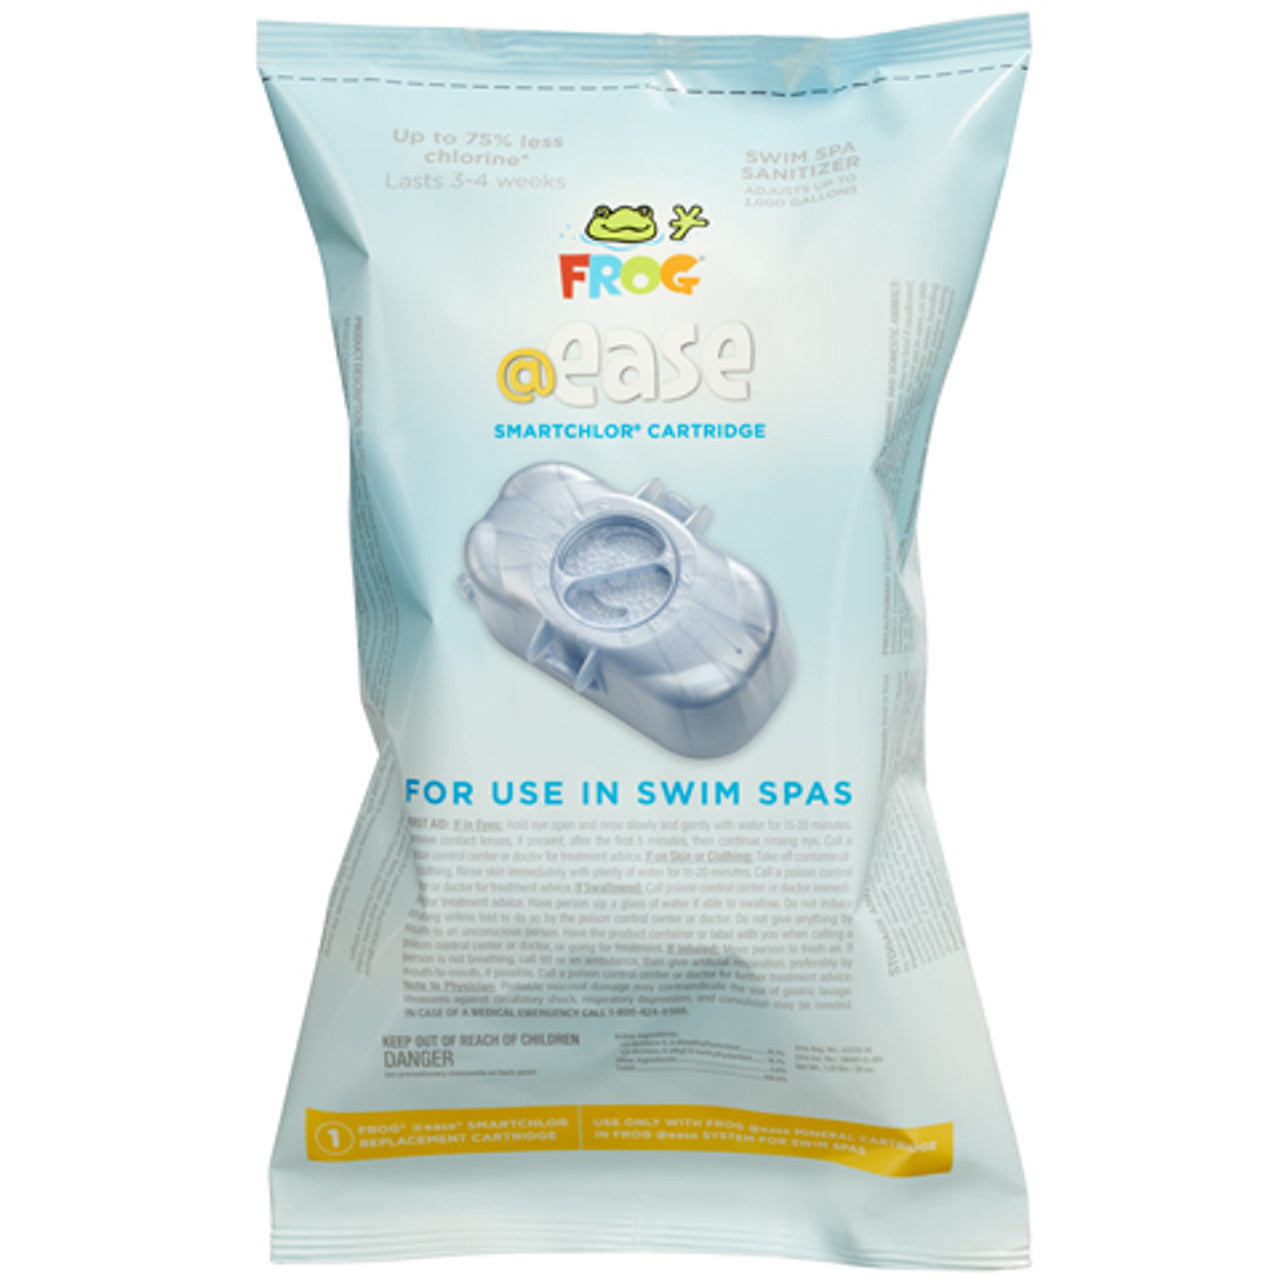 Frog @ease Swim Spa Replacement Chlorine Cartridge